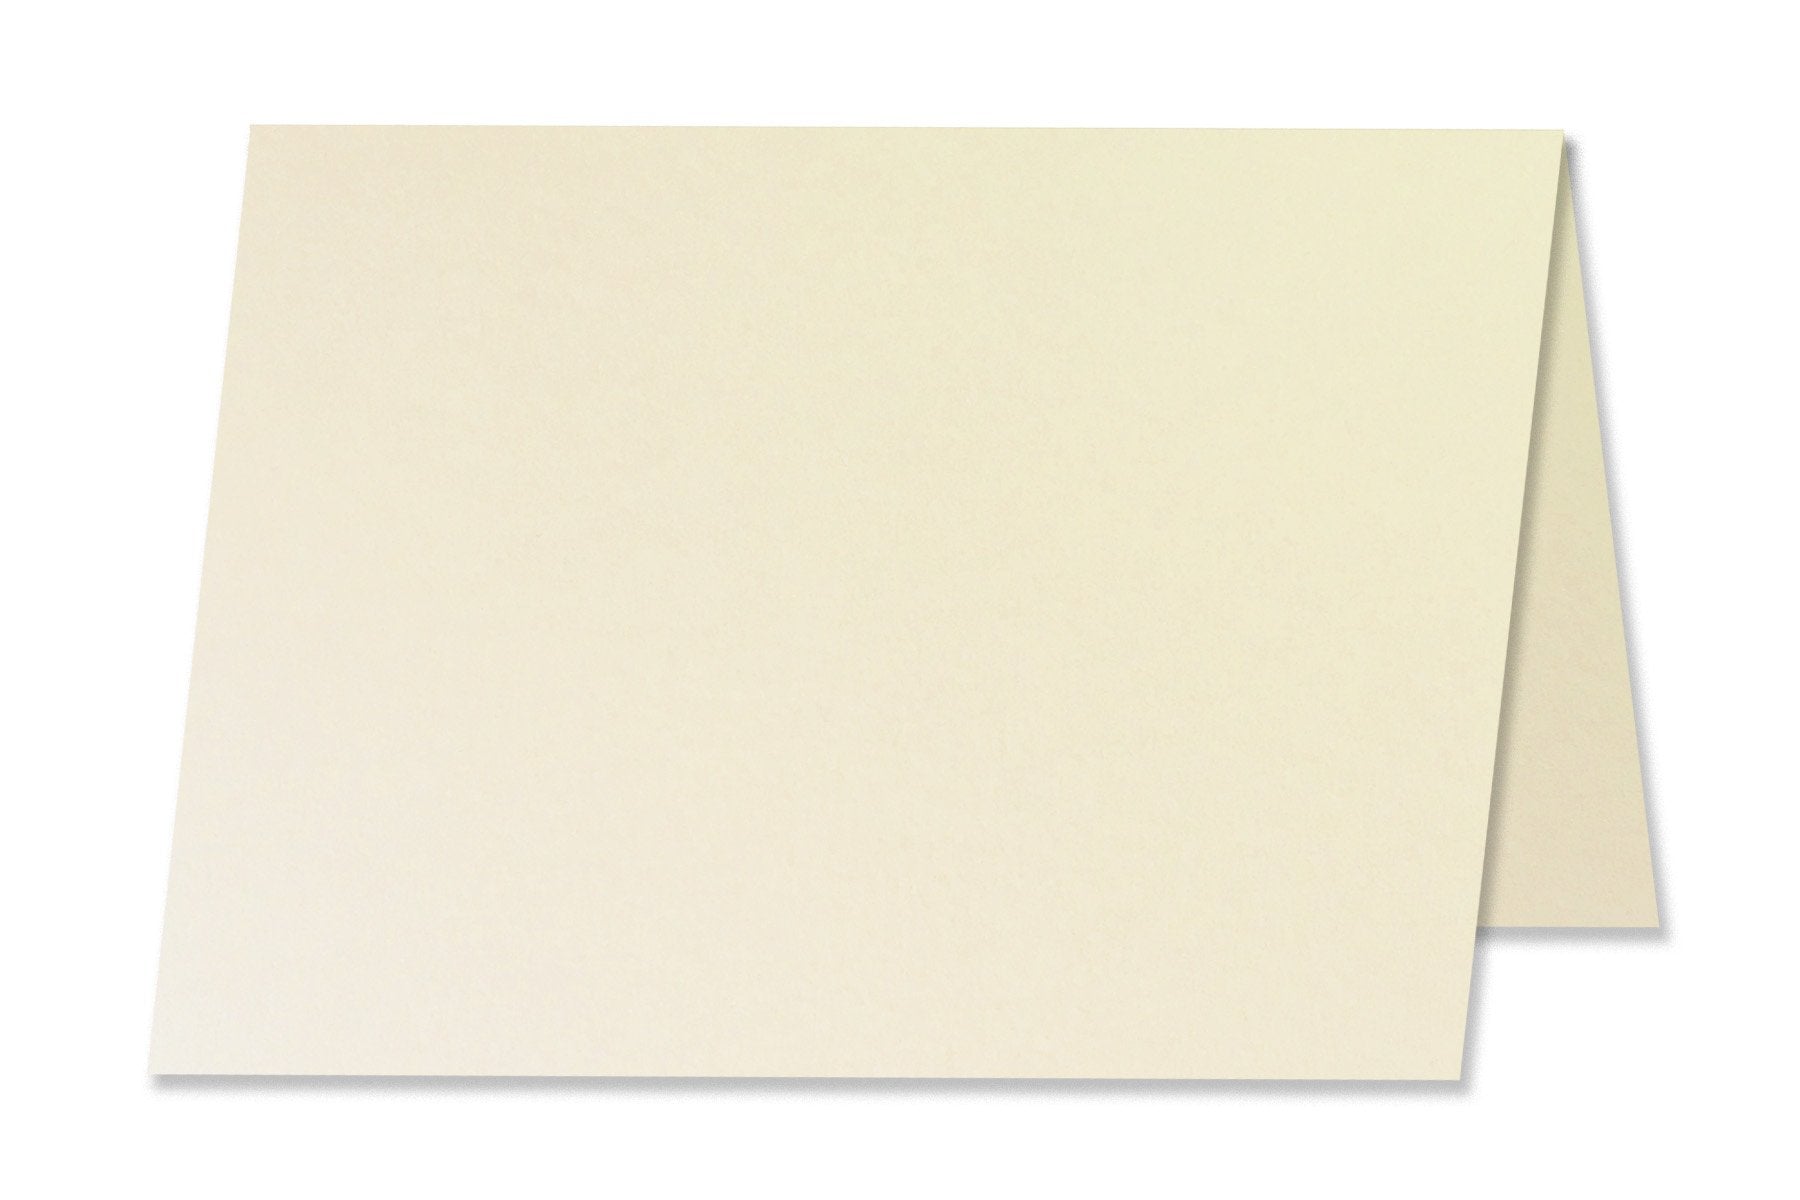 Cotton 5x7 Discount Card Stock for Letterpress Announcements - CutCardStock